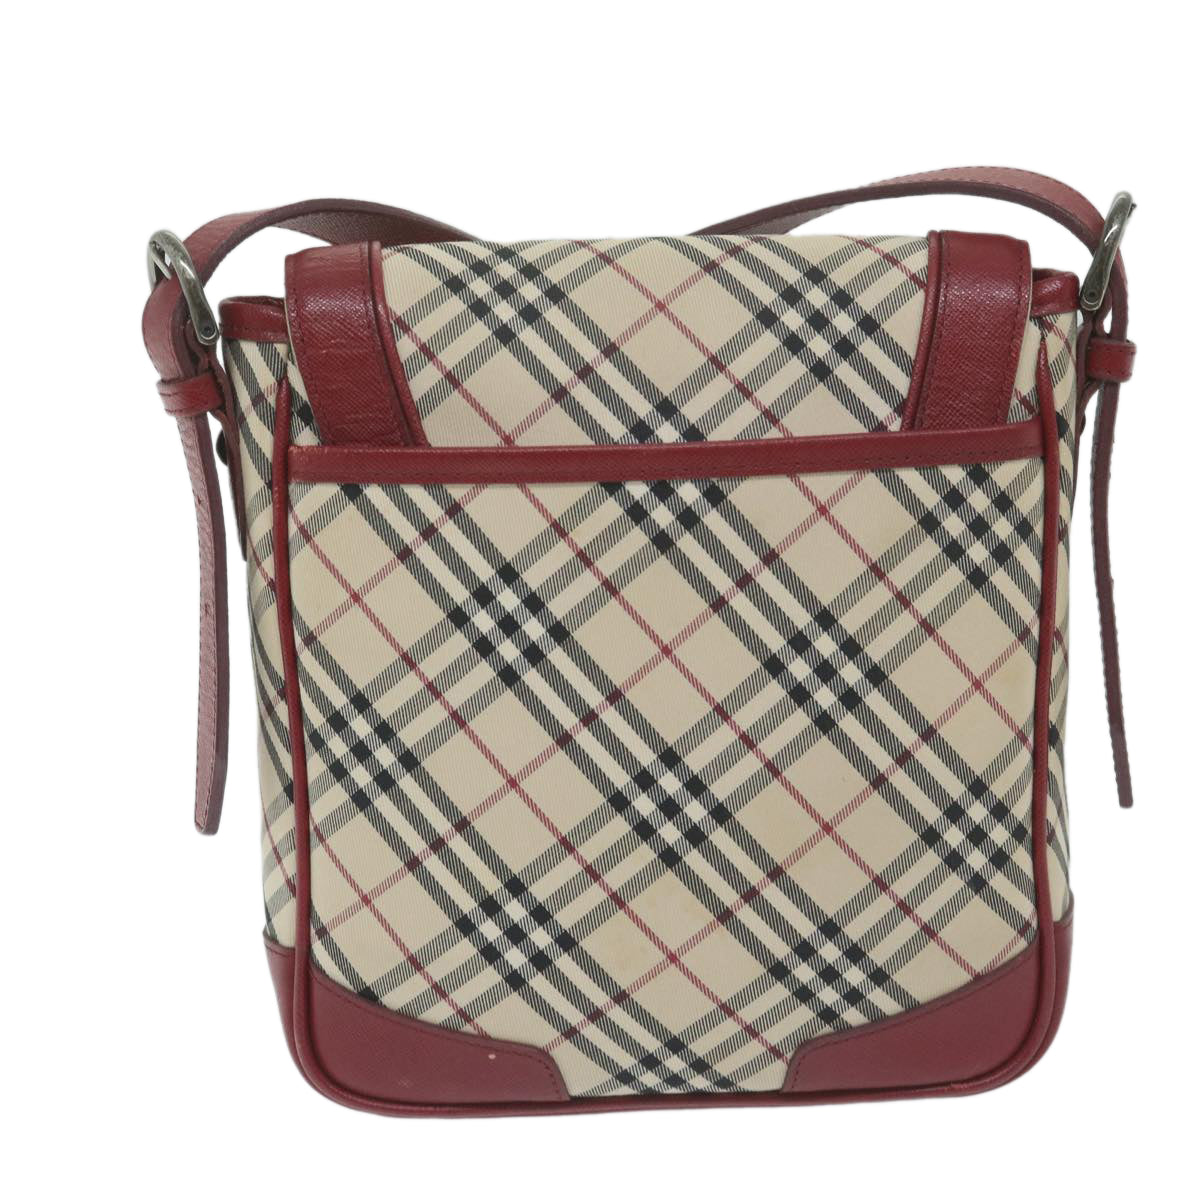 Burberrys Nova Check Shoulder Bag Nylon Canvas Beige Red Auth 63826